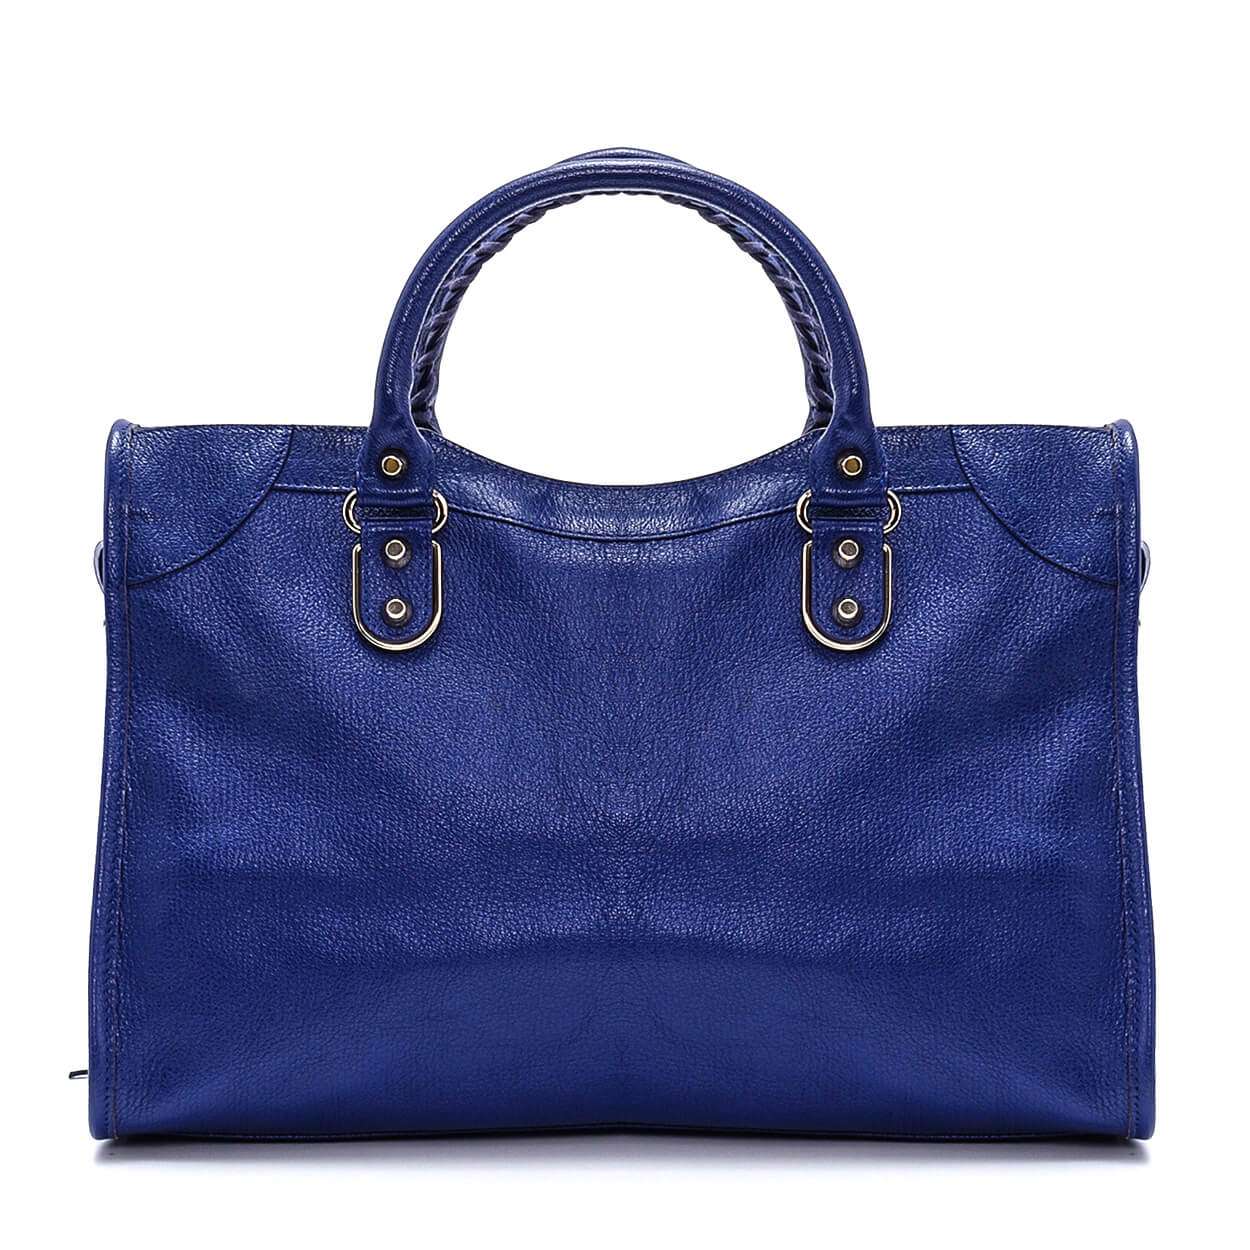 Balenciaga - Navy Blue Leather Medium City Bag 